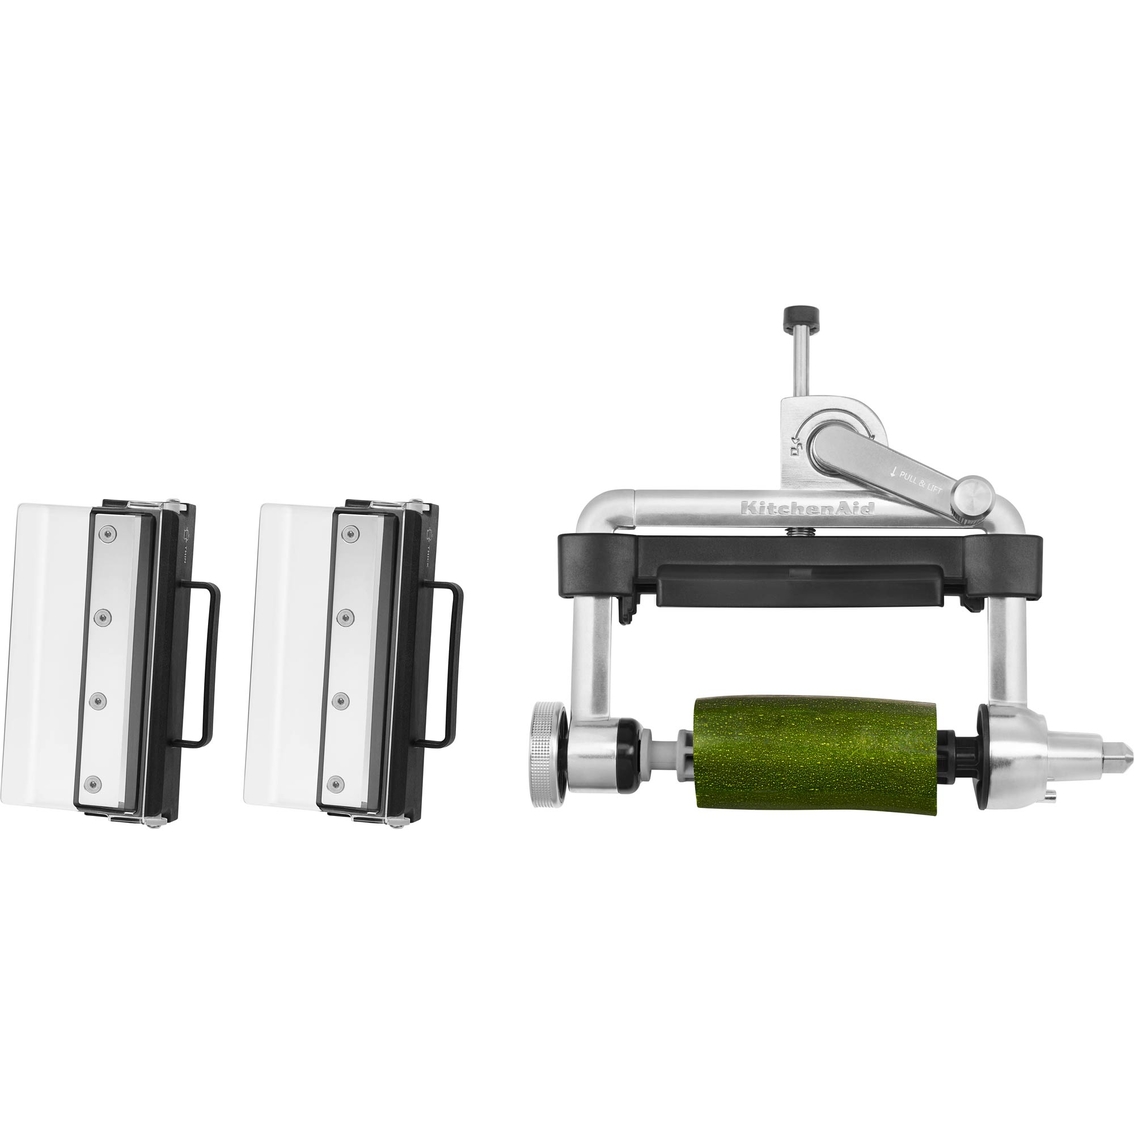 KitchenAid Stand Mixer Attachment KSM1APC Spiralizer w/ Peel, Core &  slice NEW